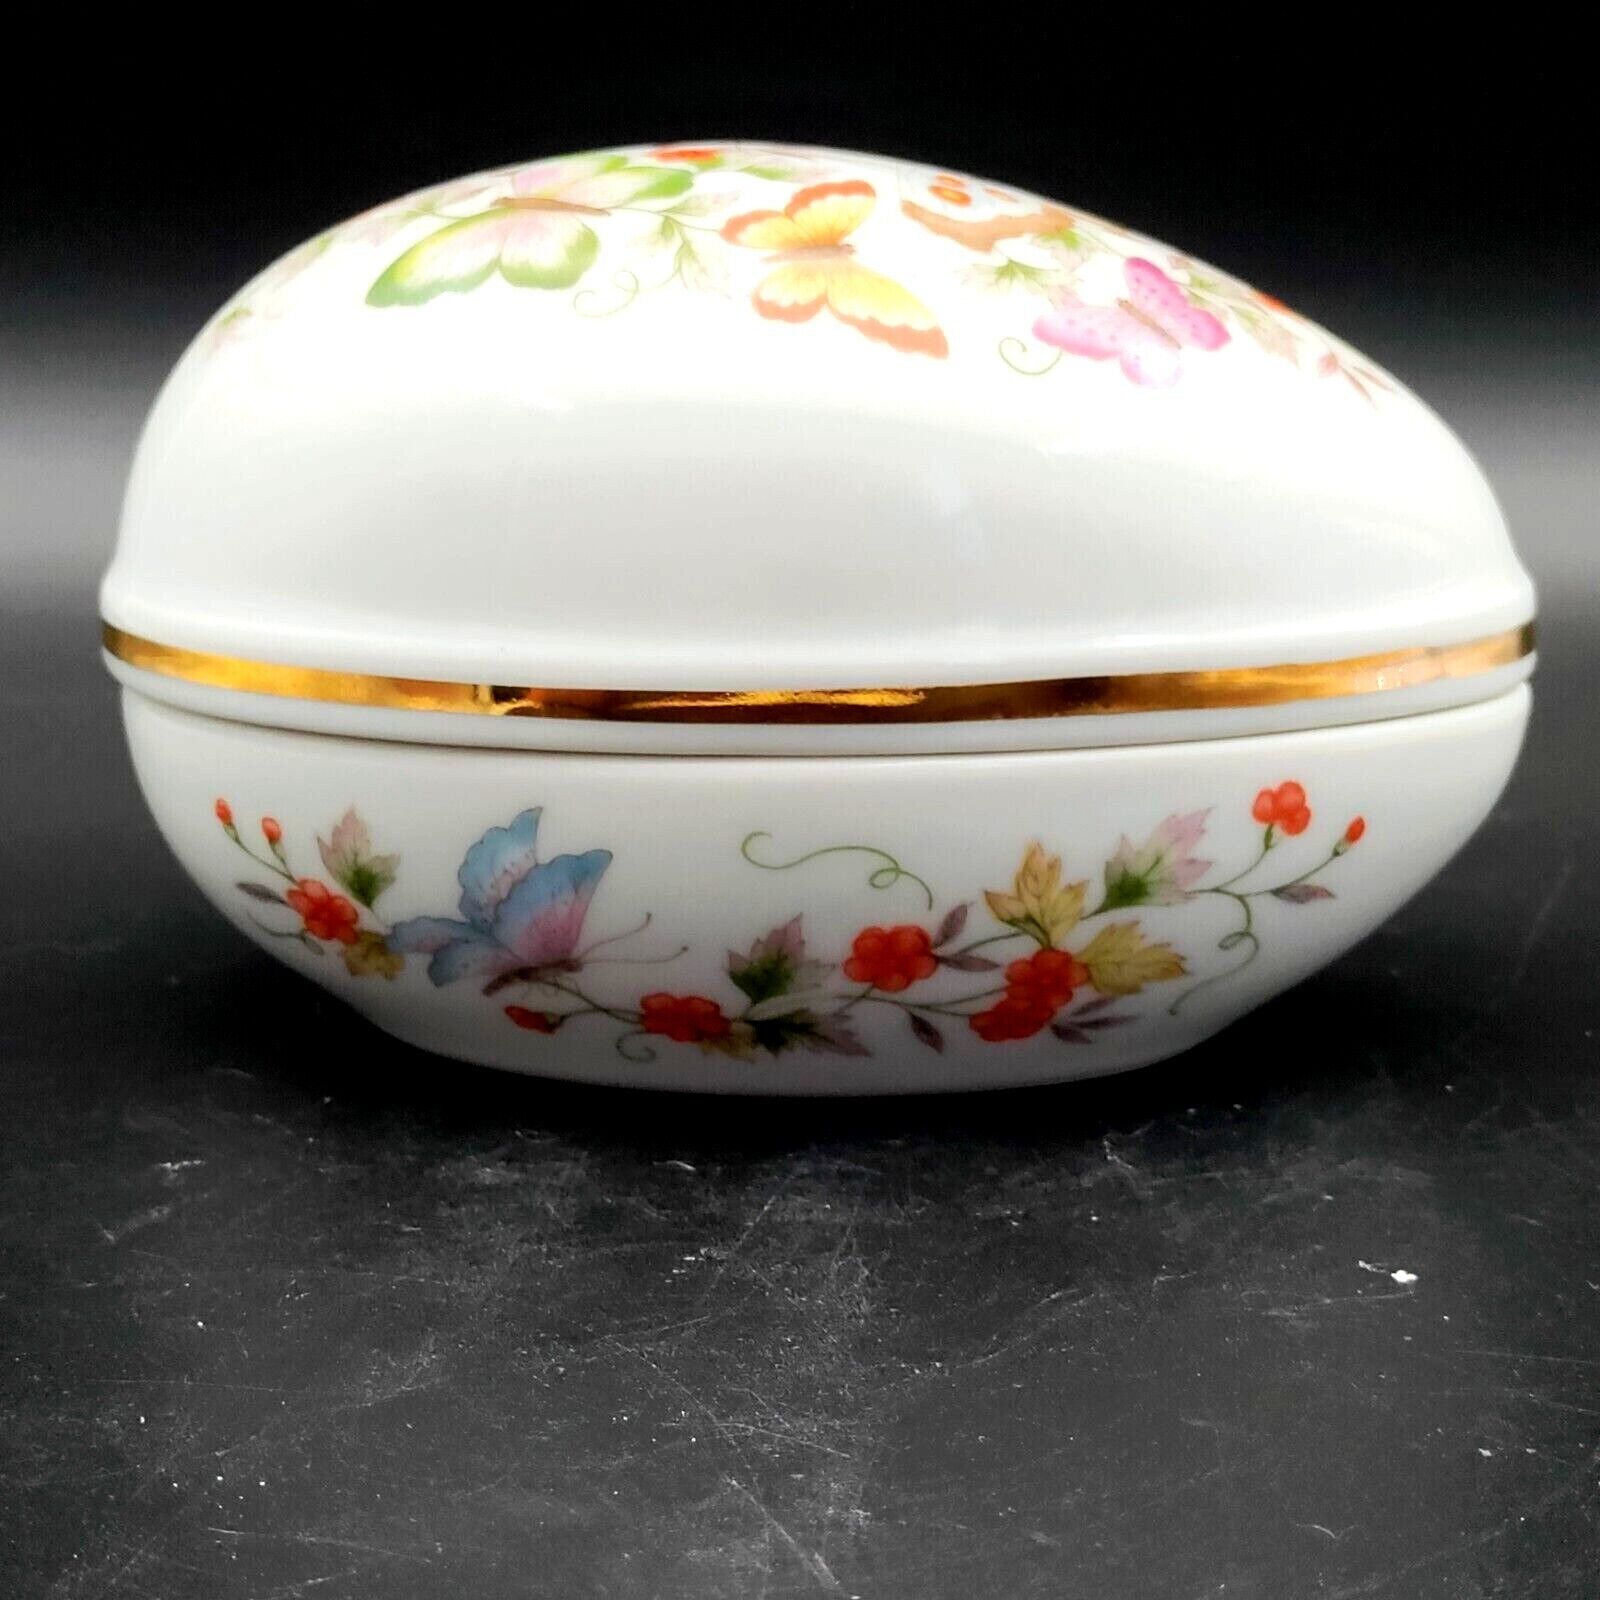 Vintage Avon Porcelain Butterfly Egg Lided Jewelry Trinket Dish 22K Gold Trim 